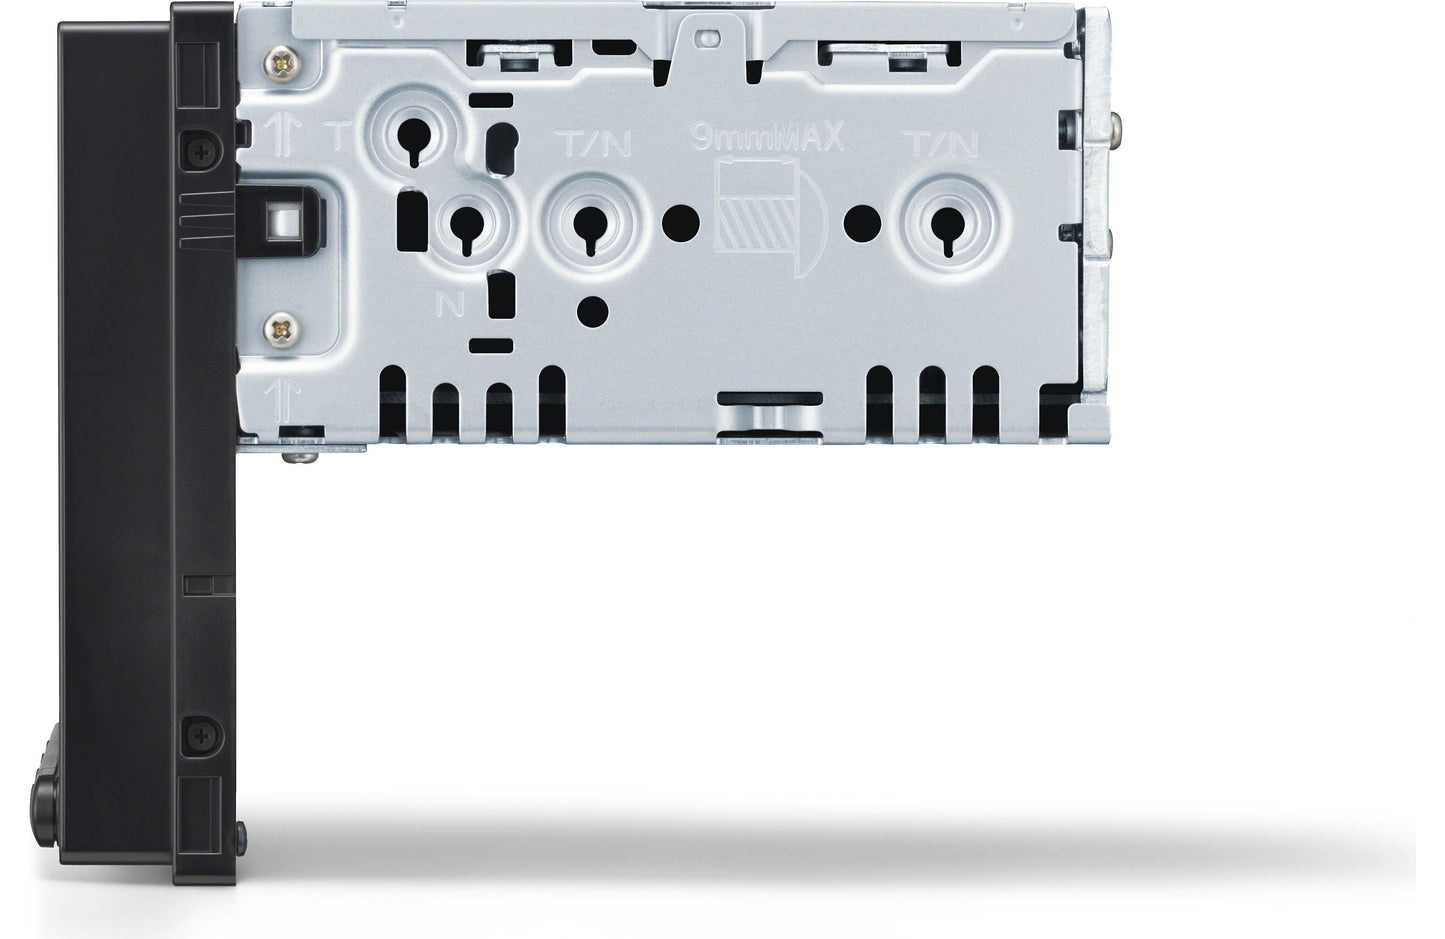 Sony XAV-AX4000 with Splash Cover Plug & Play Wiring kit